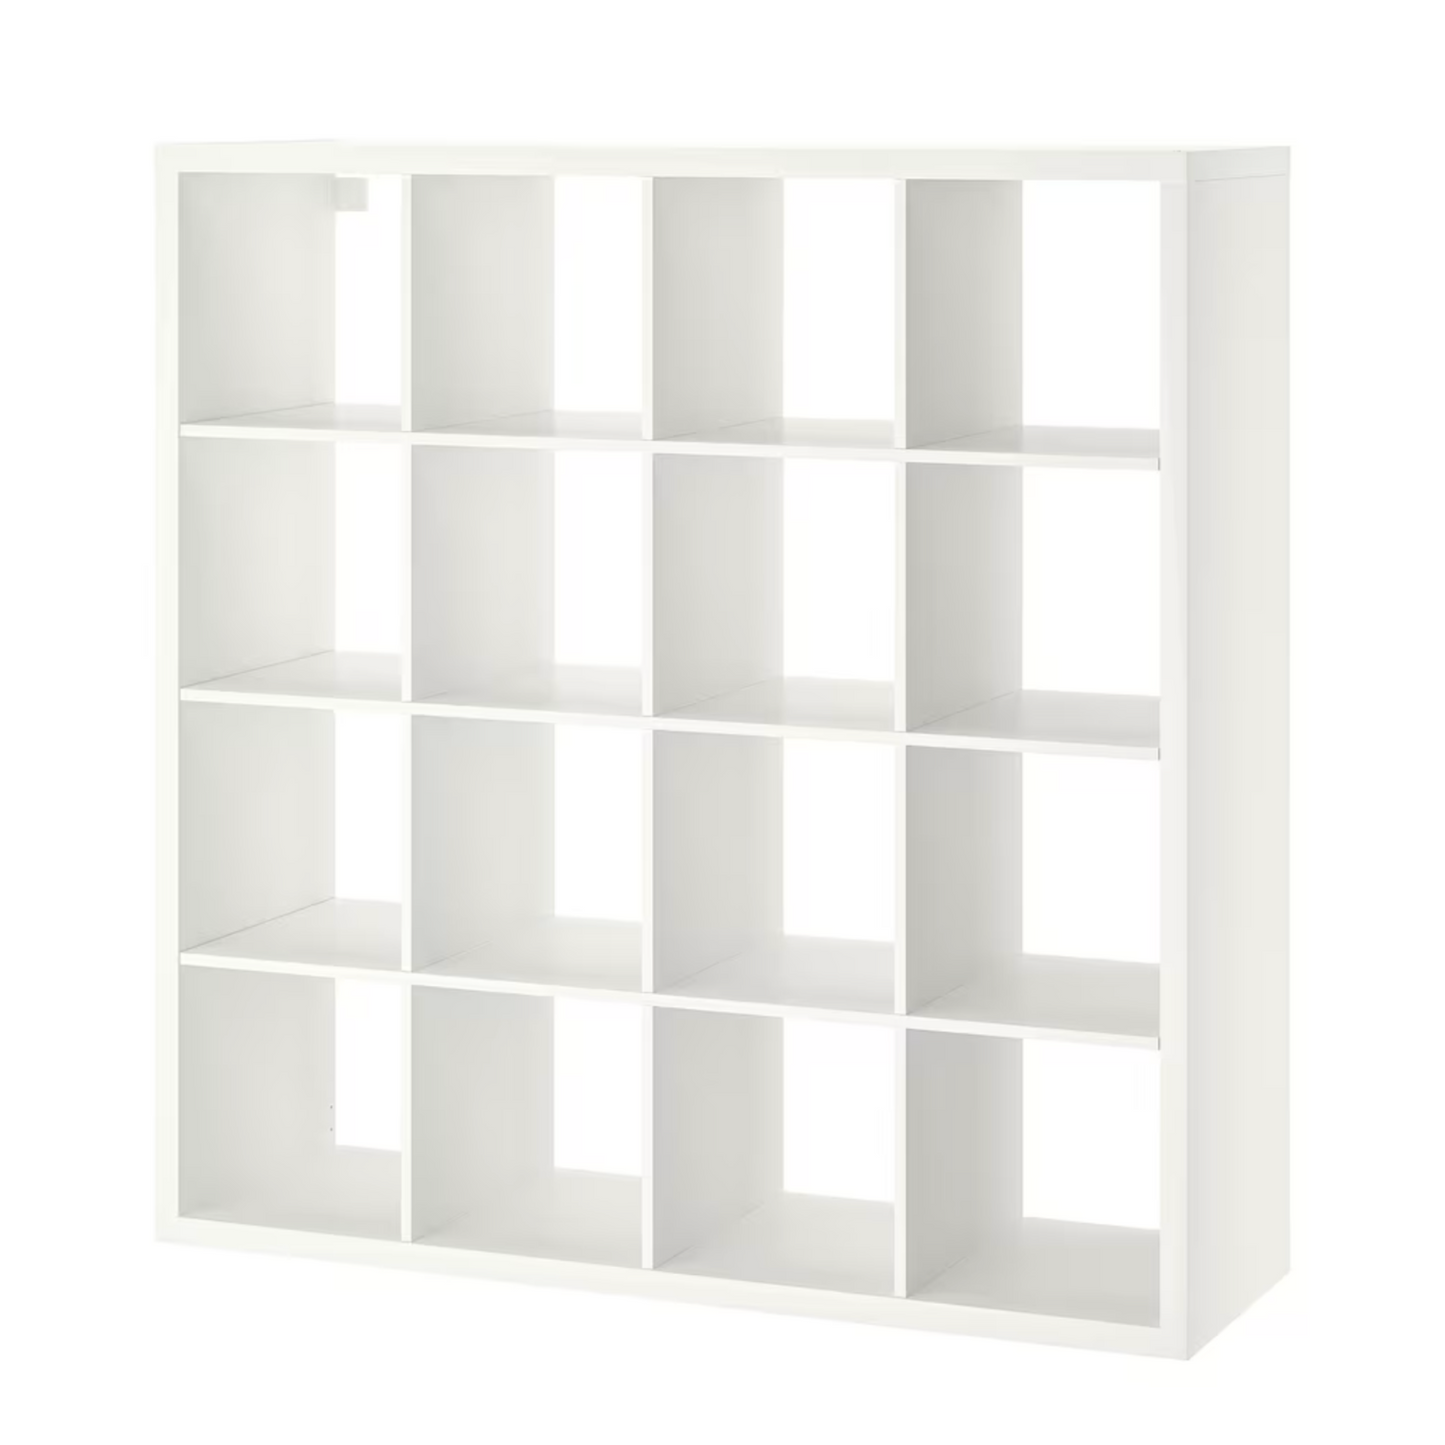 IKEA Kallax 4x4 Shelving unit, 147x147cm, White (4407082156097)